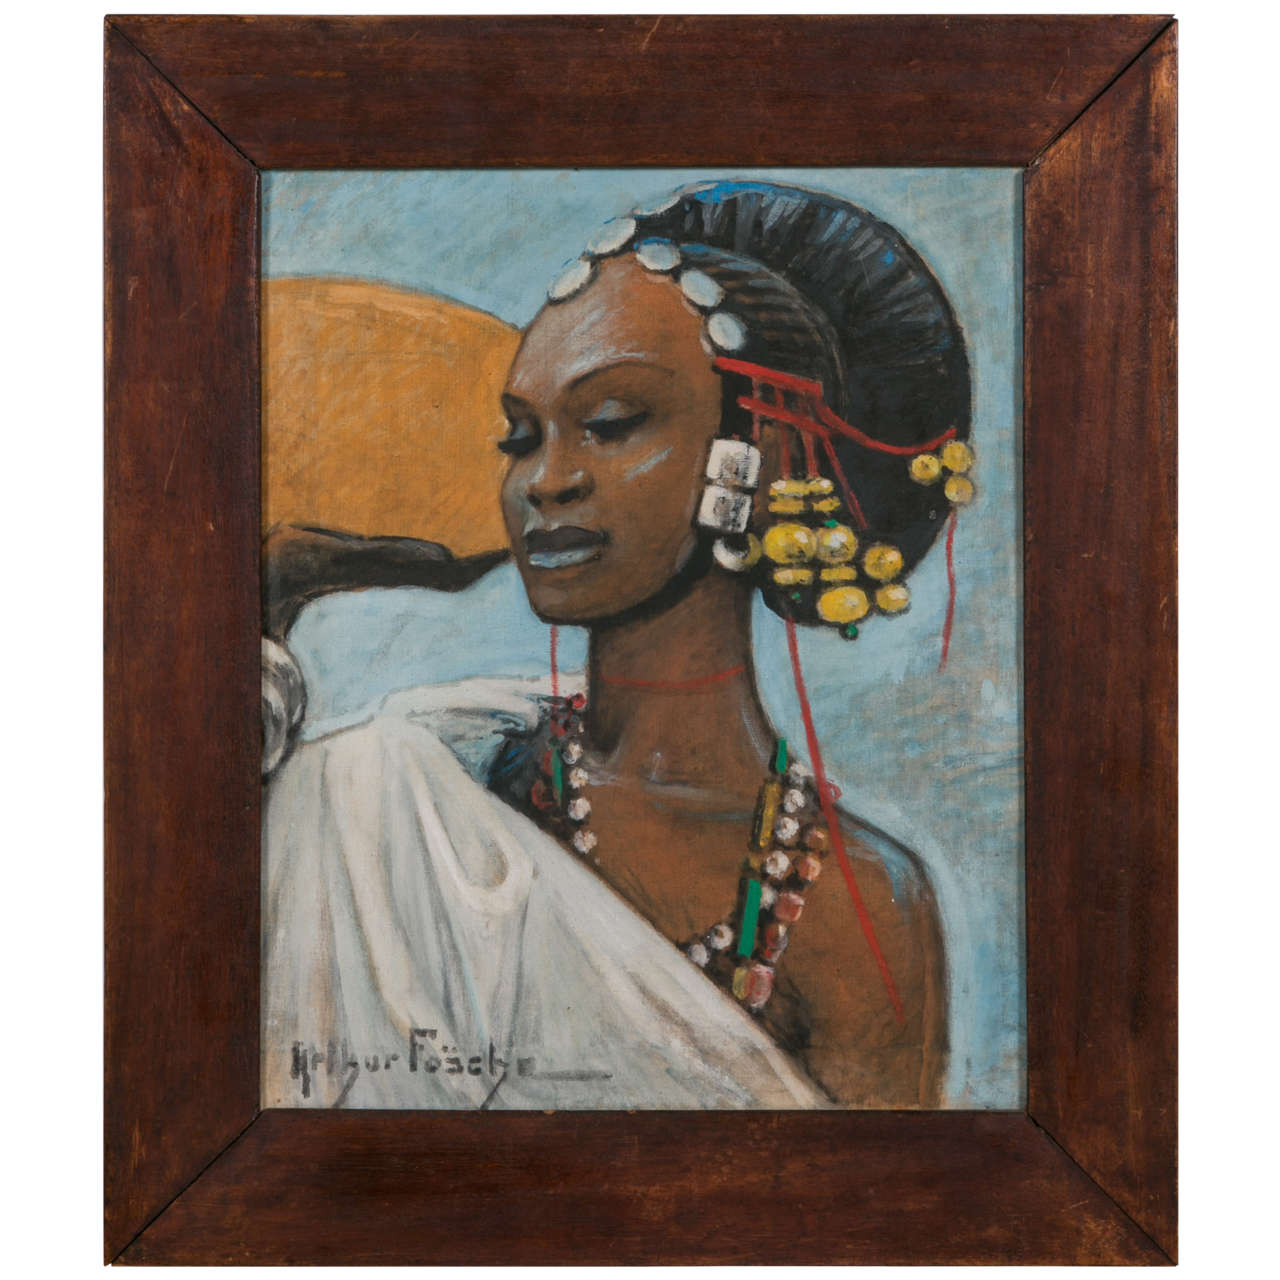 'Fulani Woman' Oil on Canvas by Pierre Foache, Art Deco, France, circa 1930